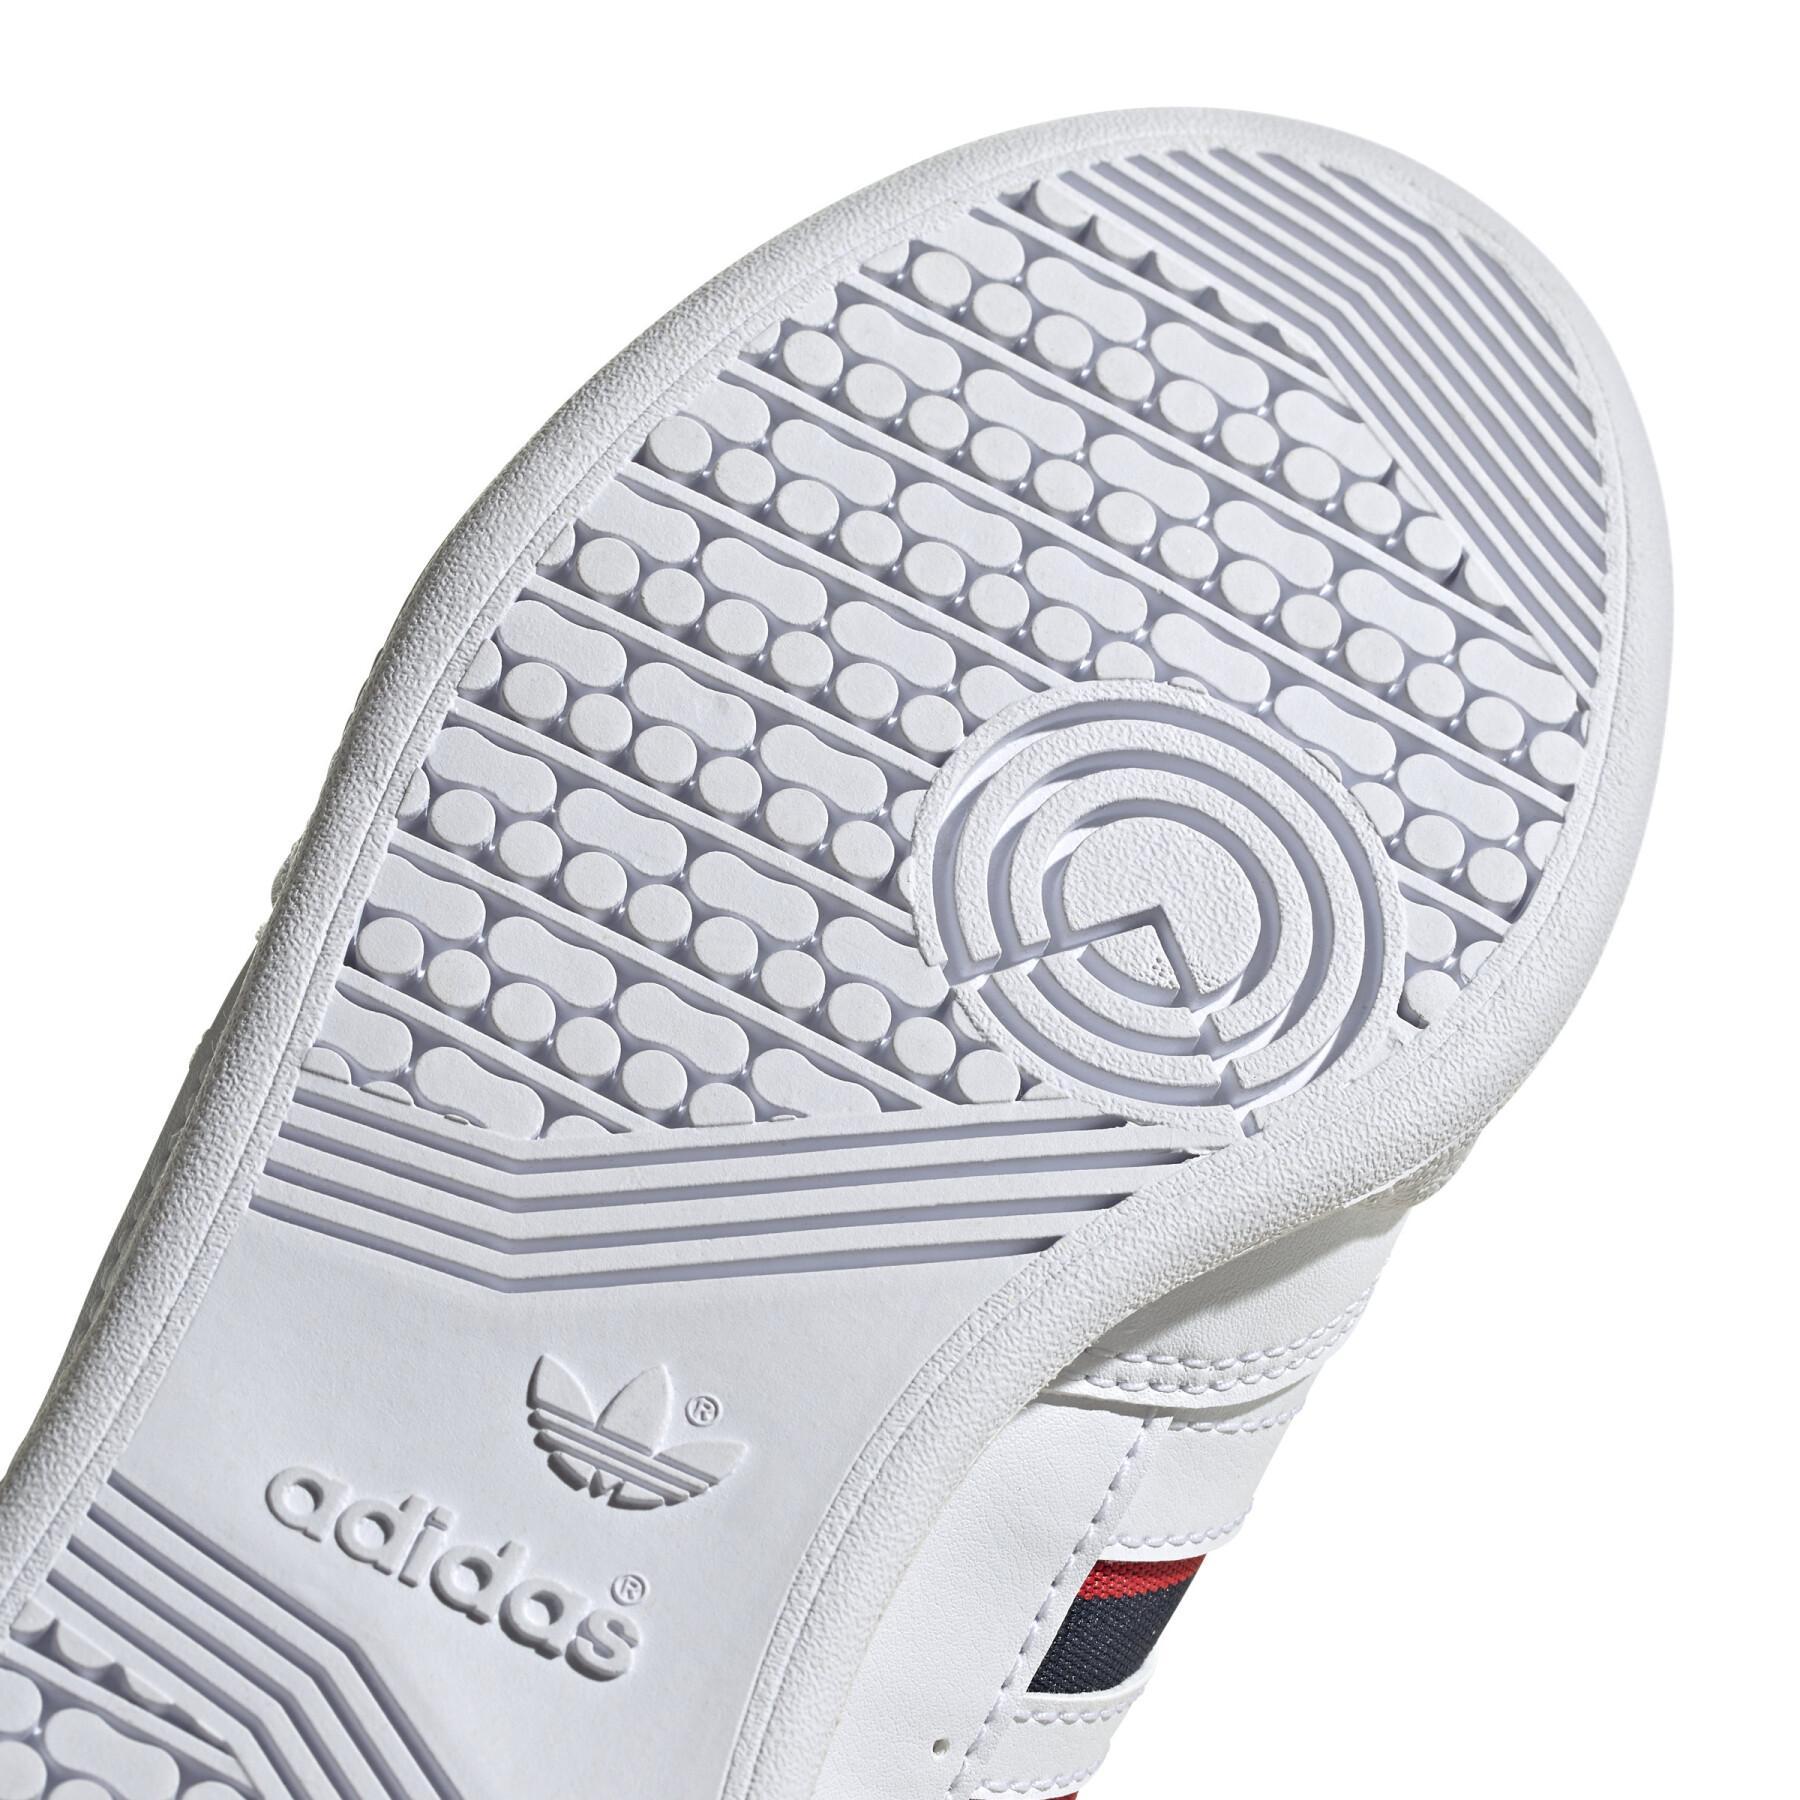 Children's sneakers adidas Originals Continental 80 Stripes